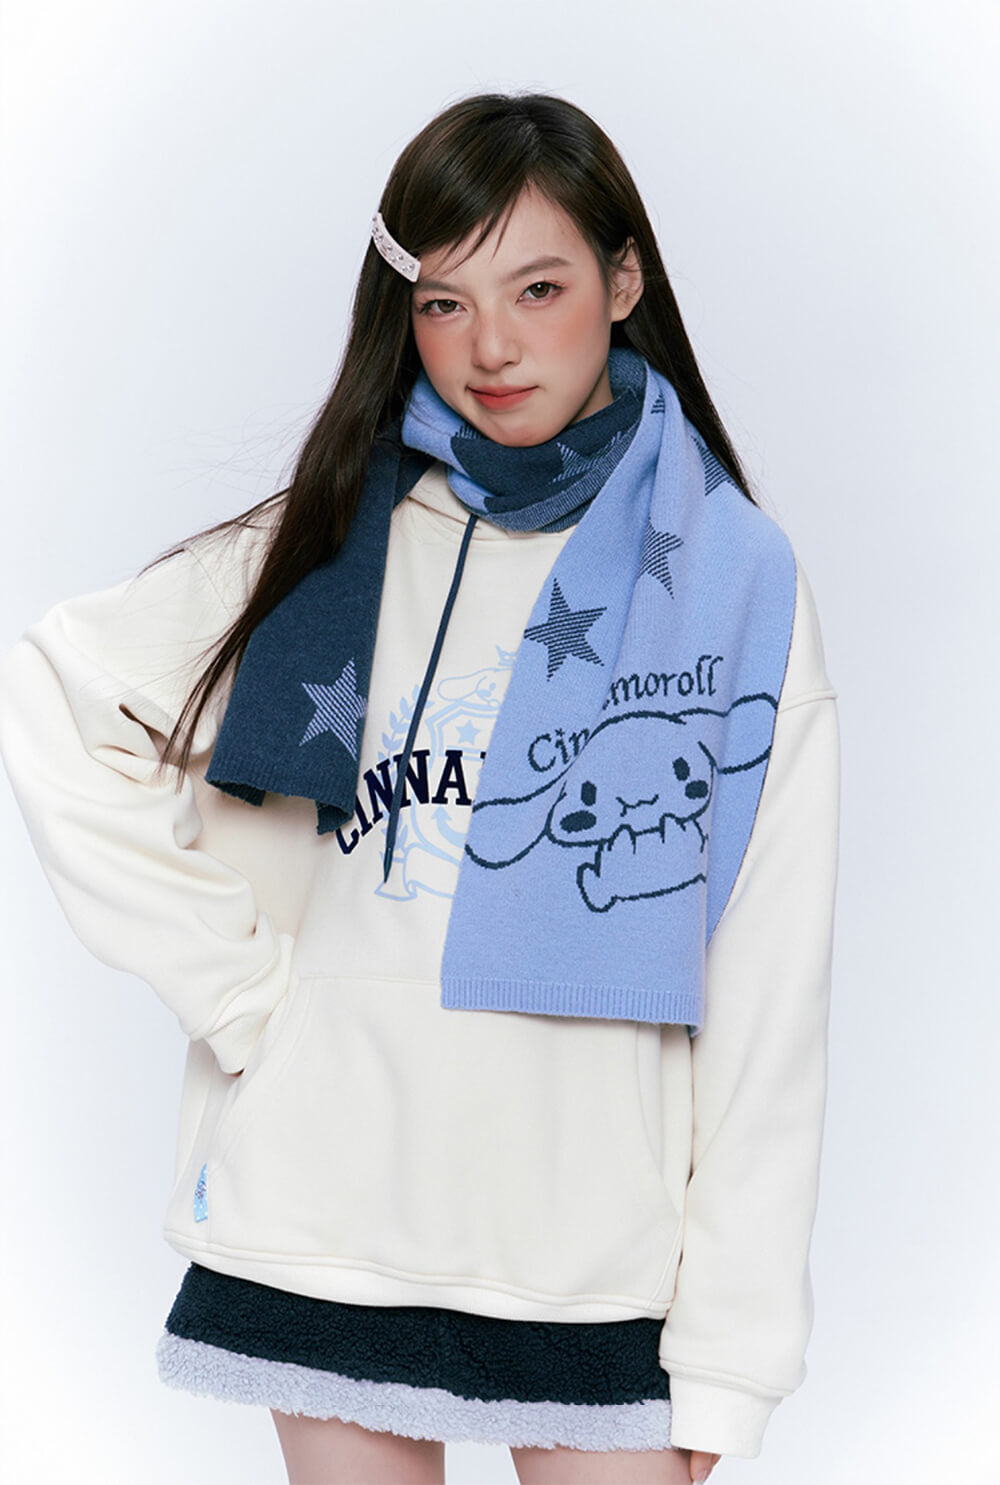 Japanese-girl-fashion-preppy-look-styled-by-cinnamoroll-cream-white-hoodie-and-cinnamorll-blue-scarf